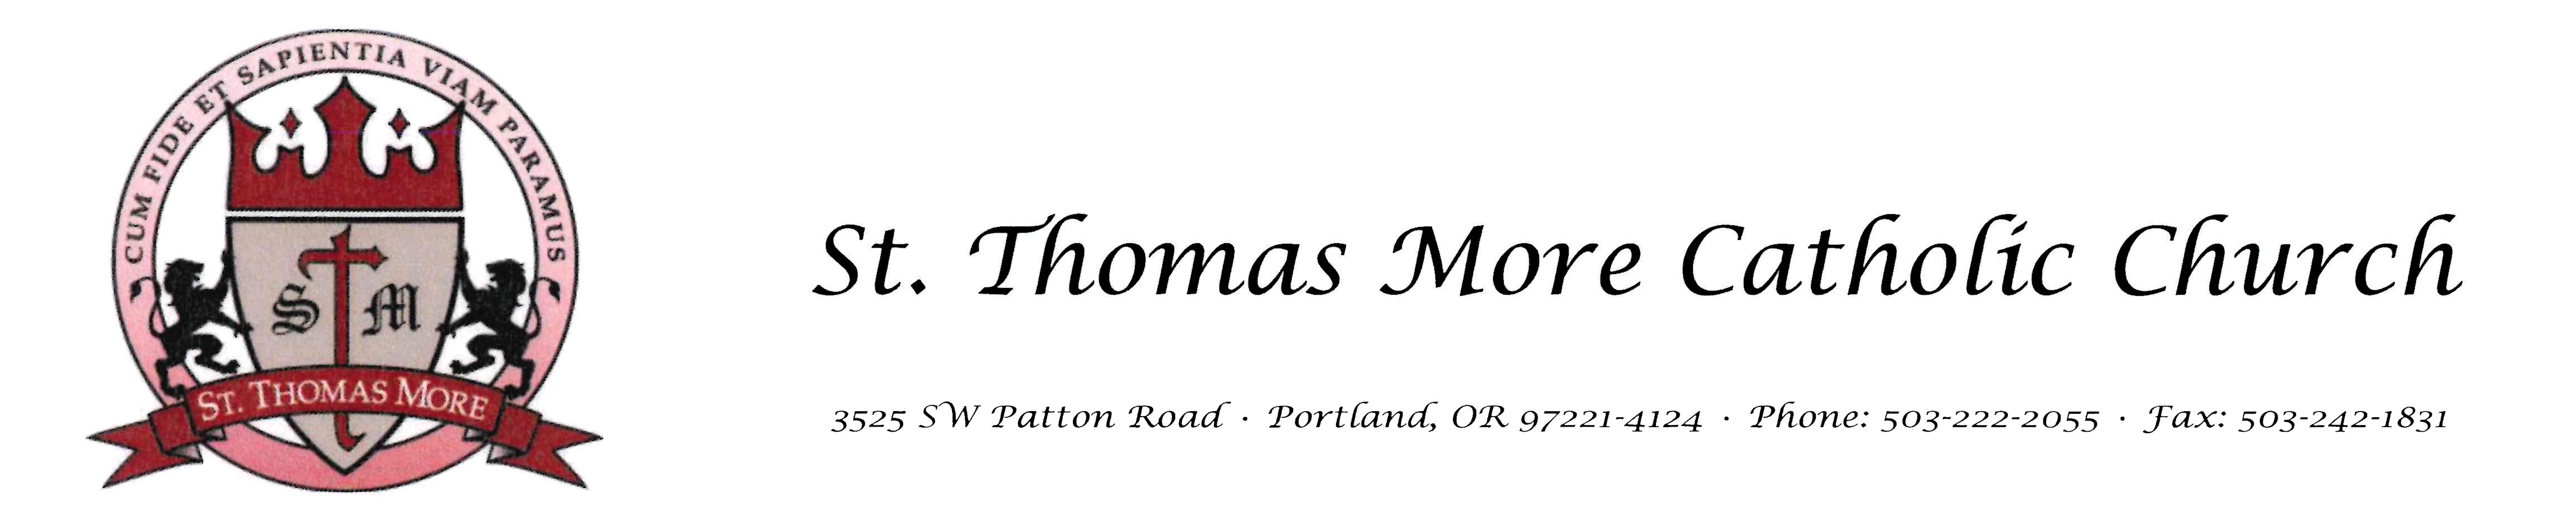 St. Thomas More Catholic Church logo